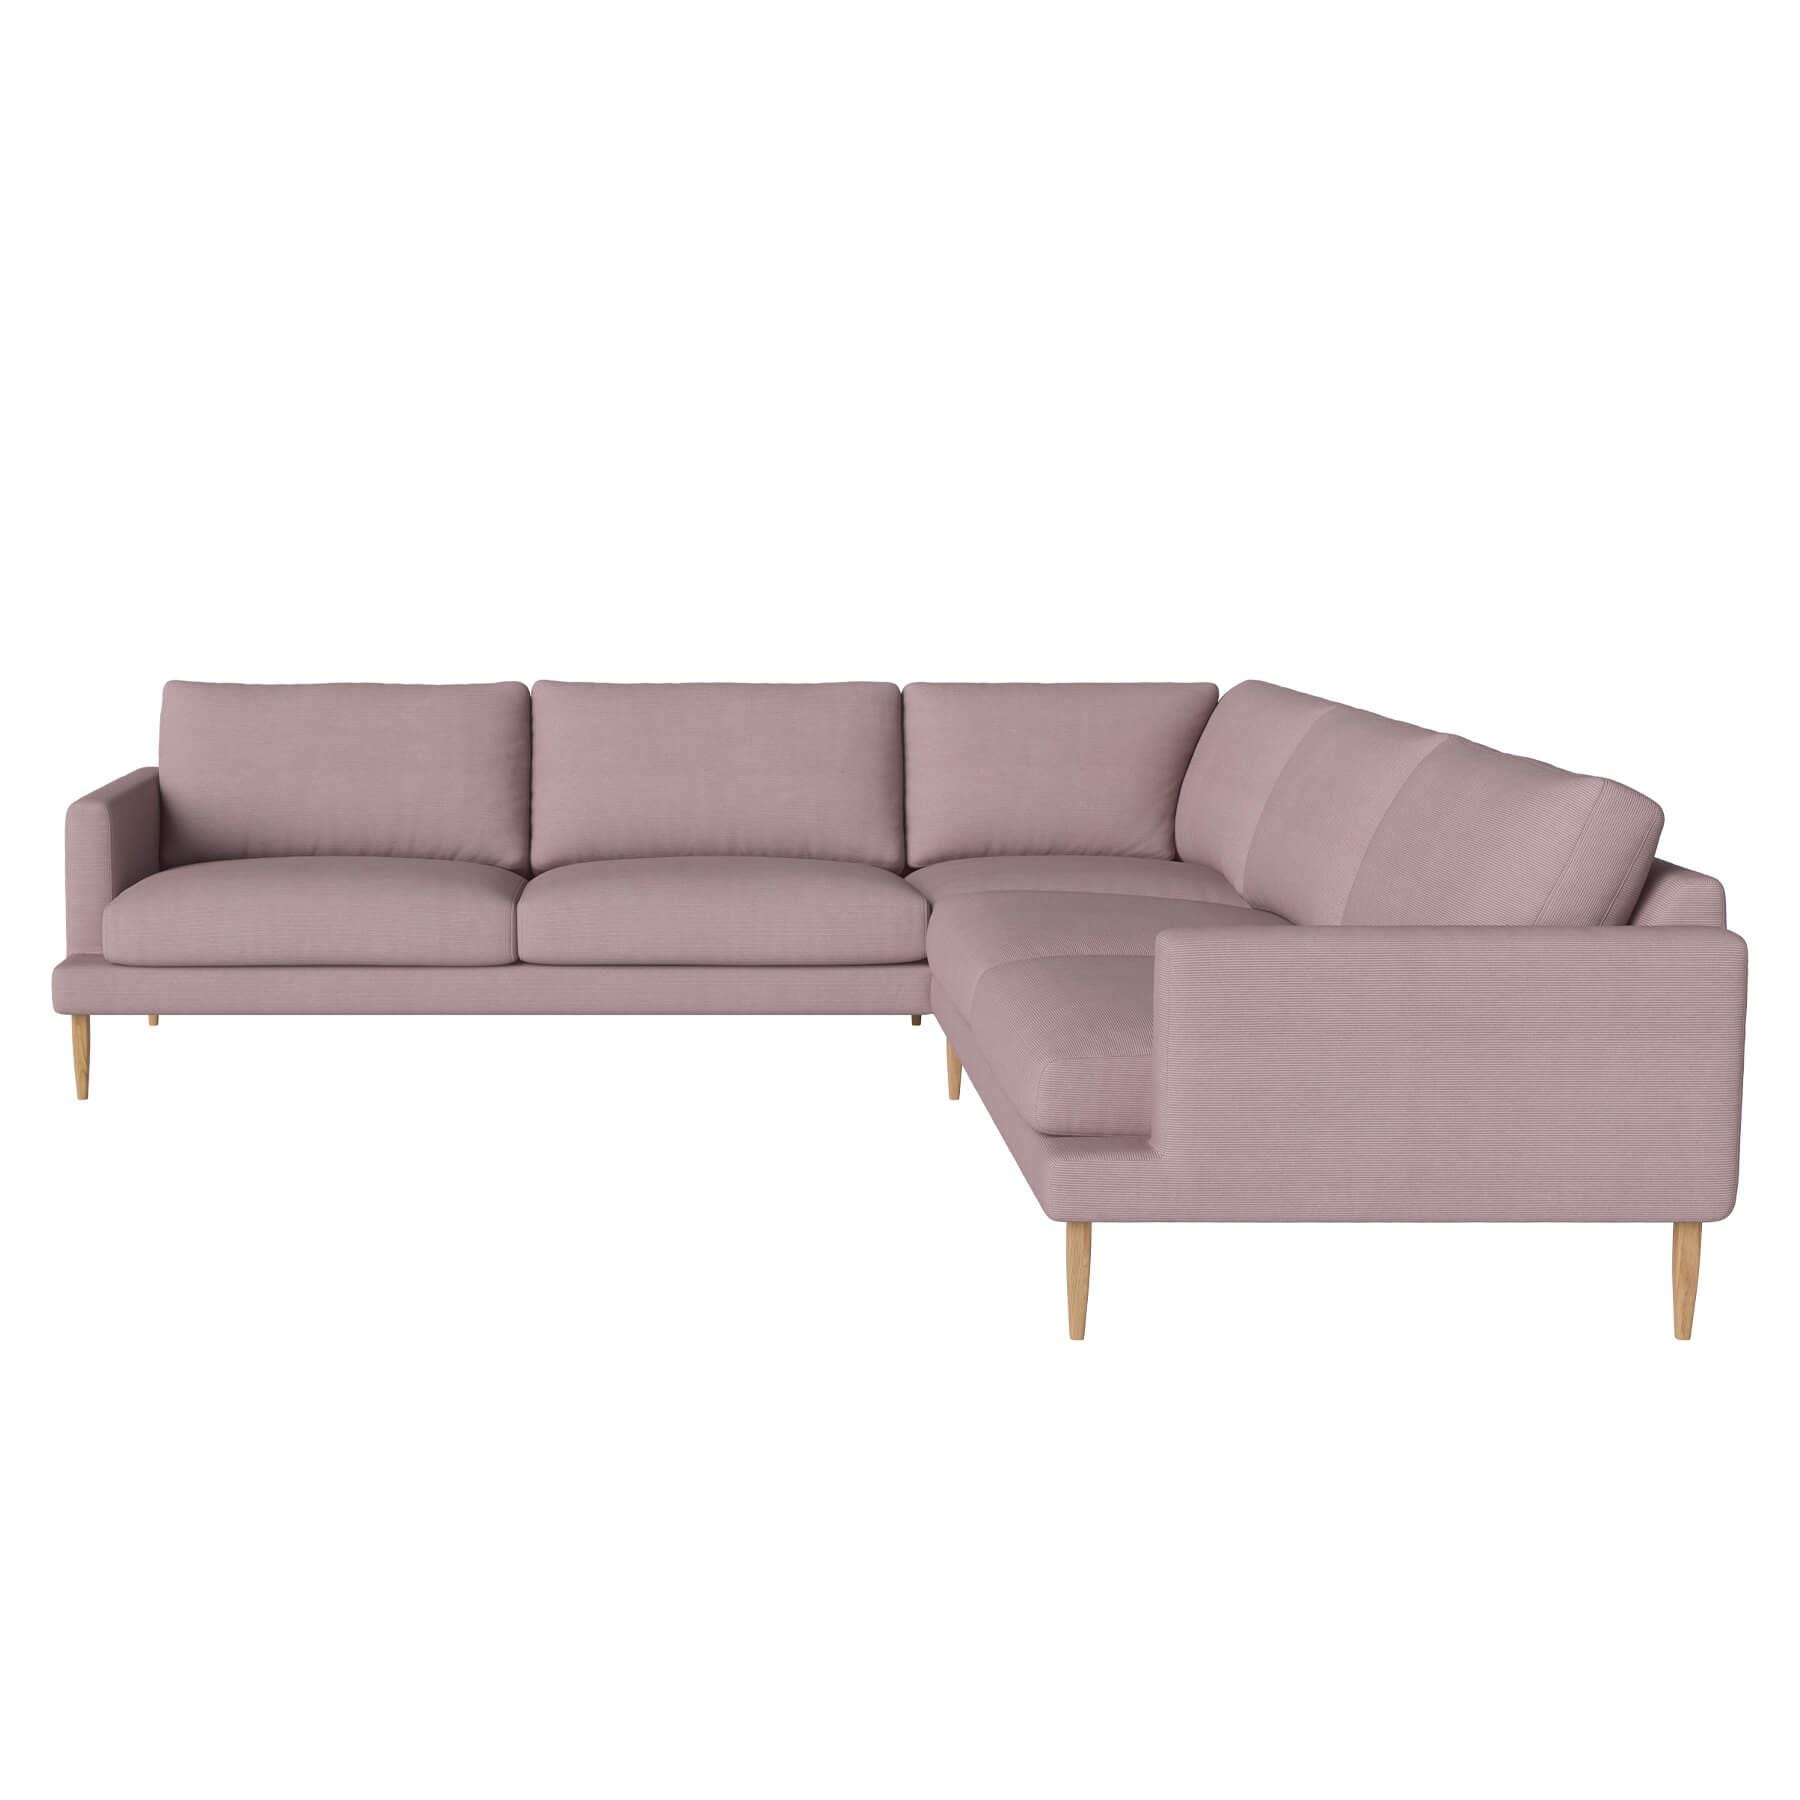 Bolia Veneda Sofa 6 Seater Sofa Corner Sofa Oiled Oak Linea Rosa Pink Designer Furniture From Holloways Of Ludlow